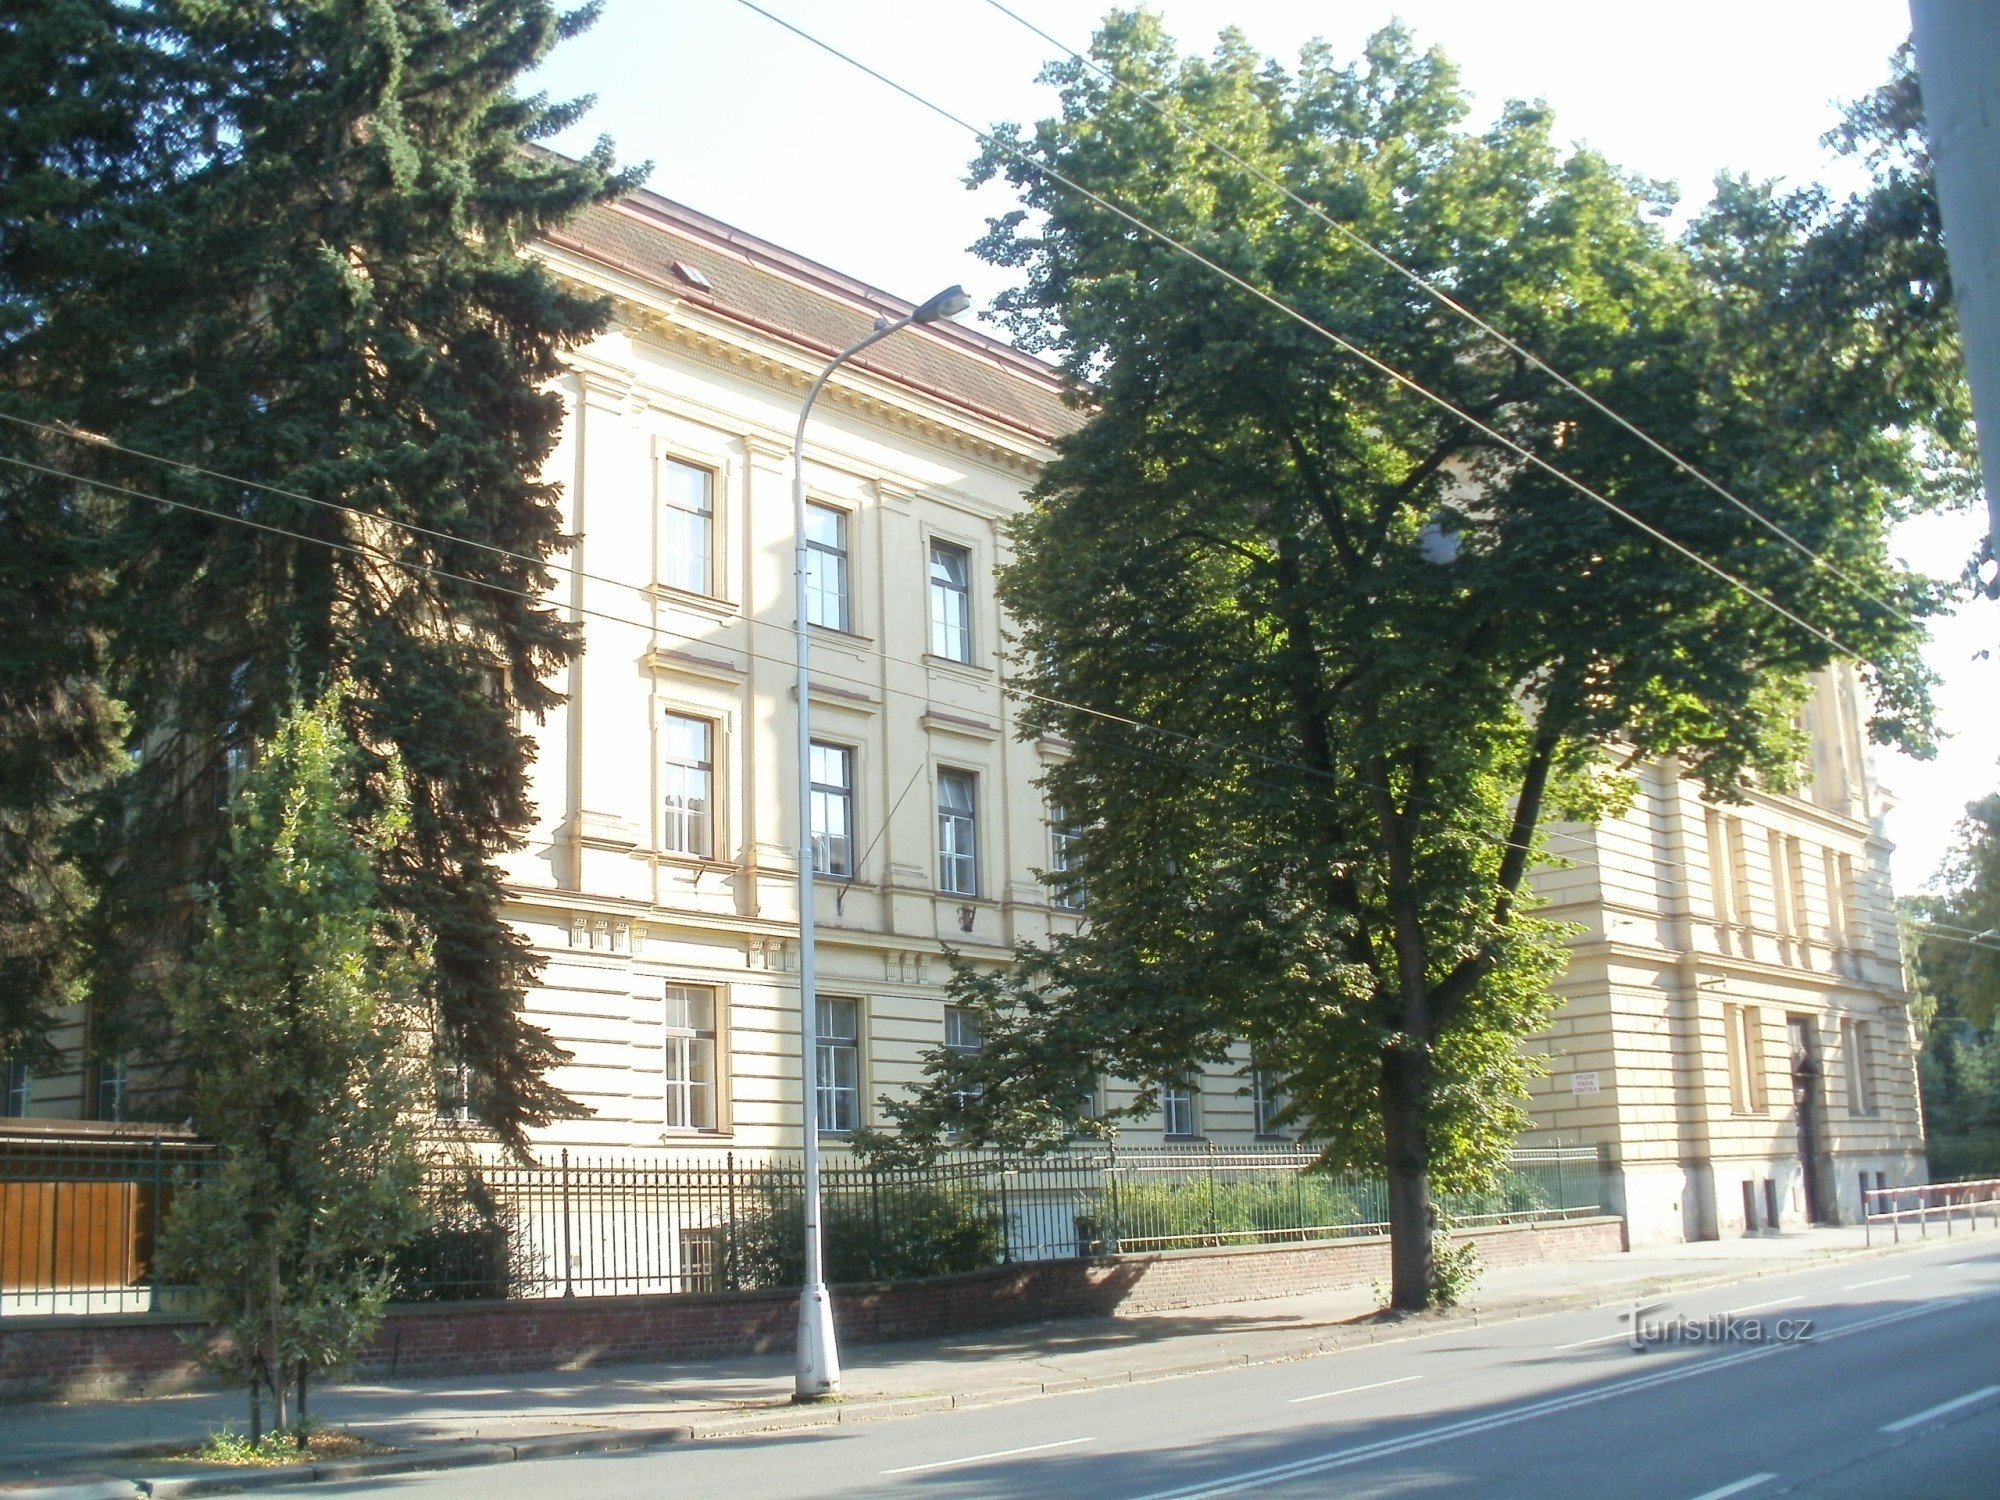 Hradec Králové - Pospíšilova třída, former De Notre Dame monastery